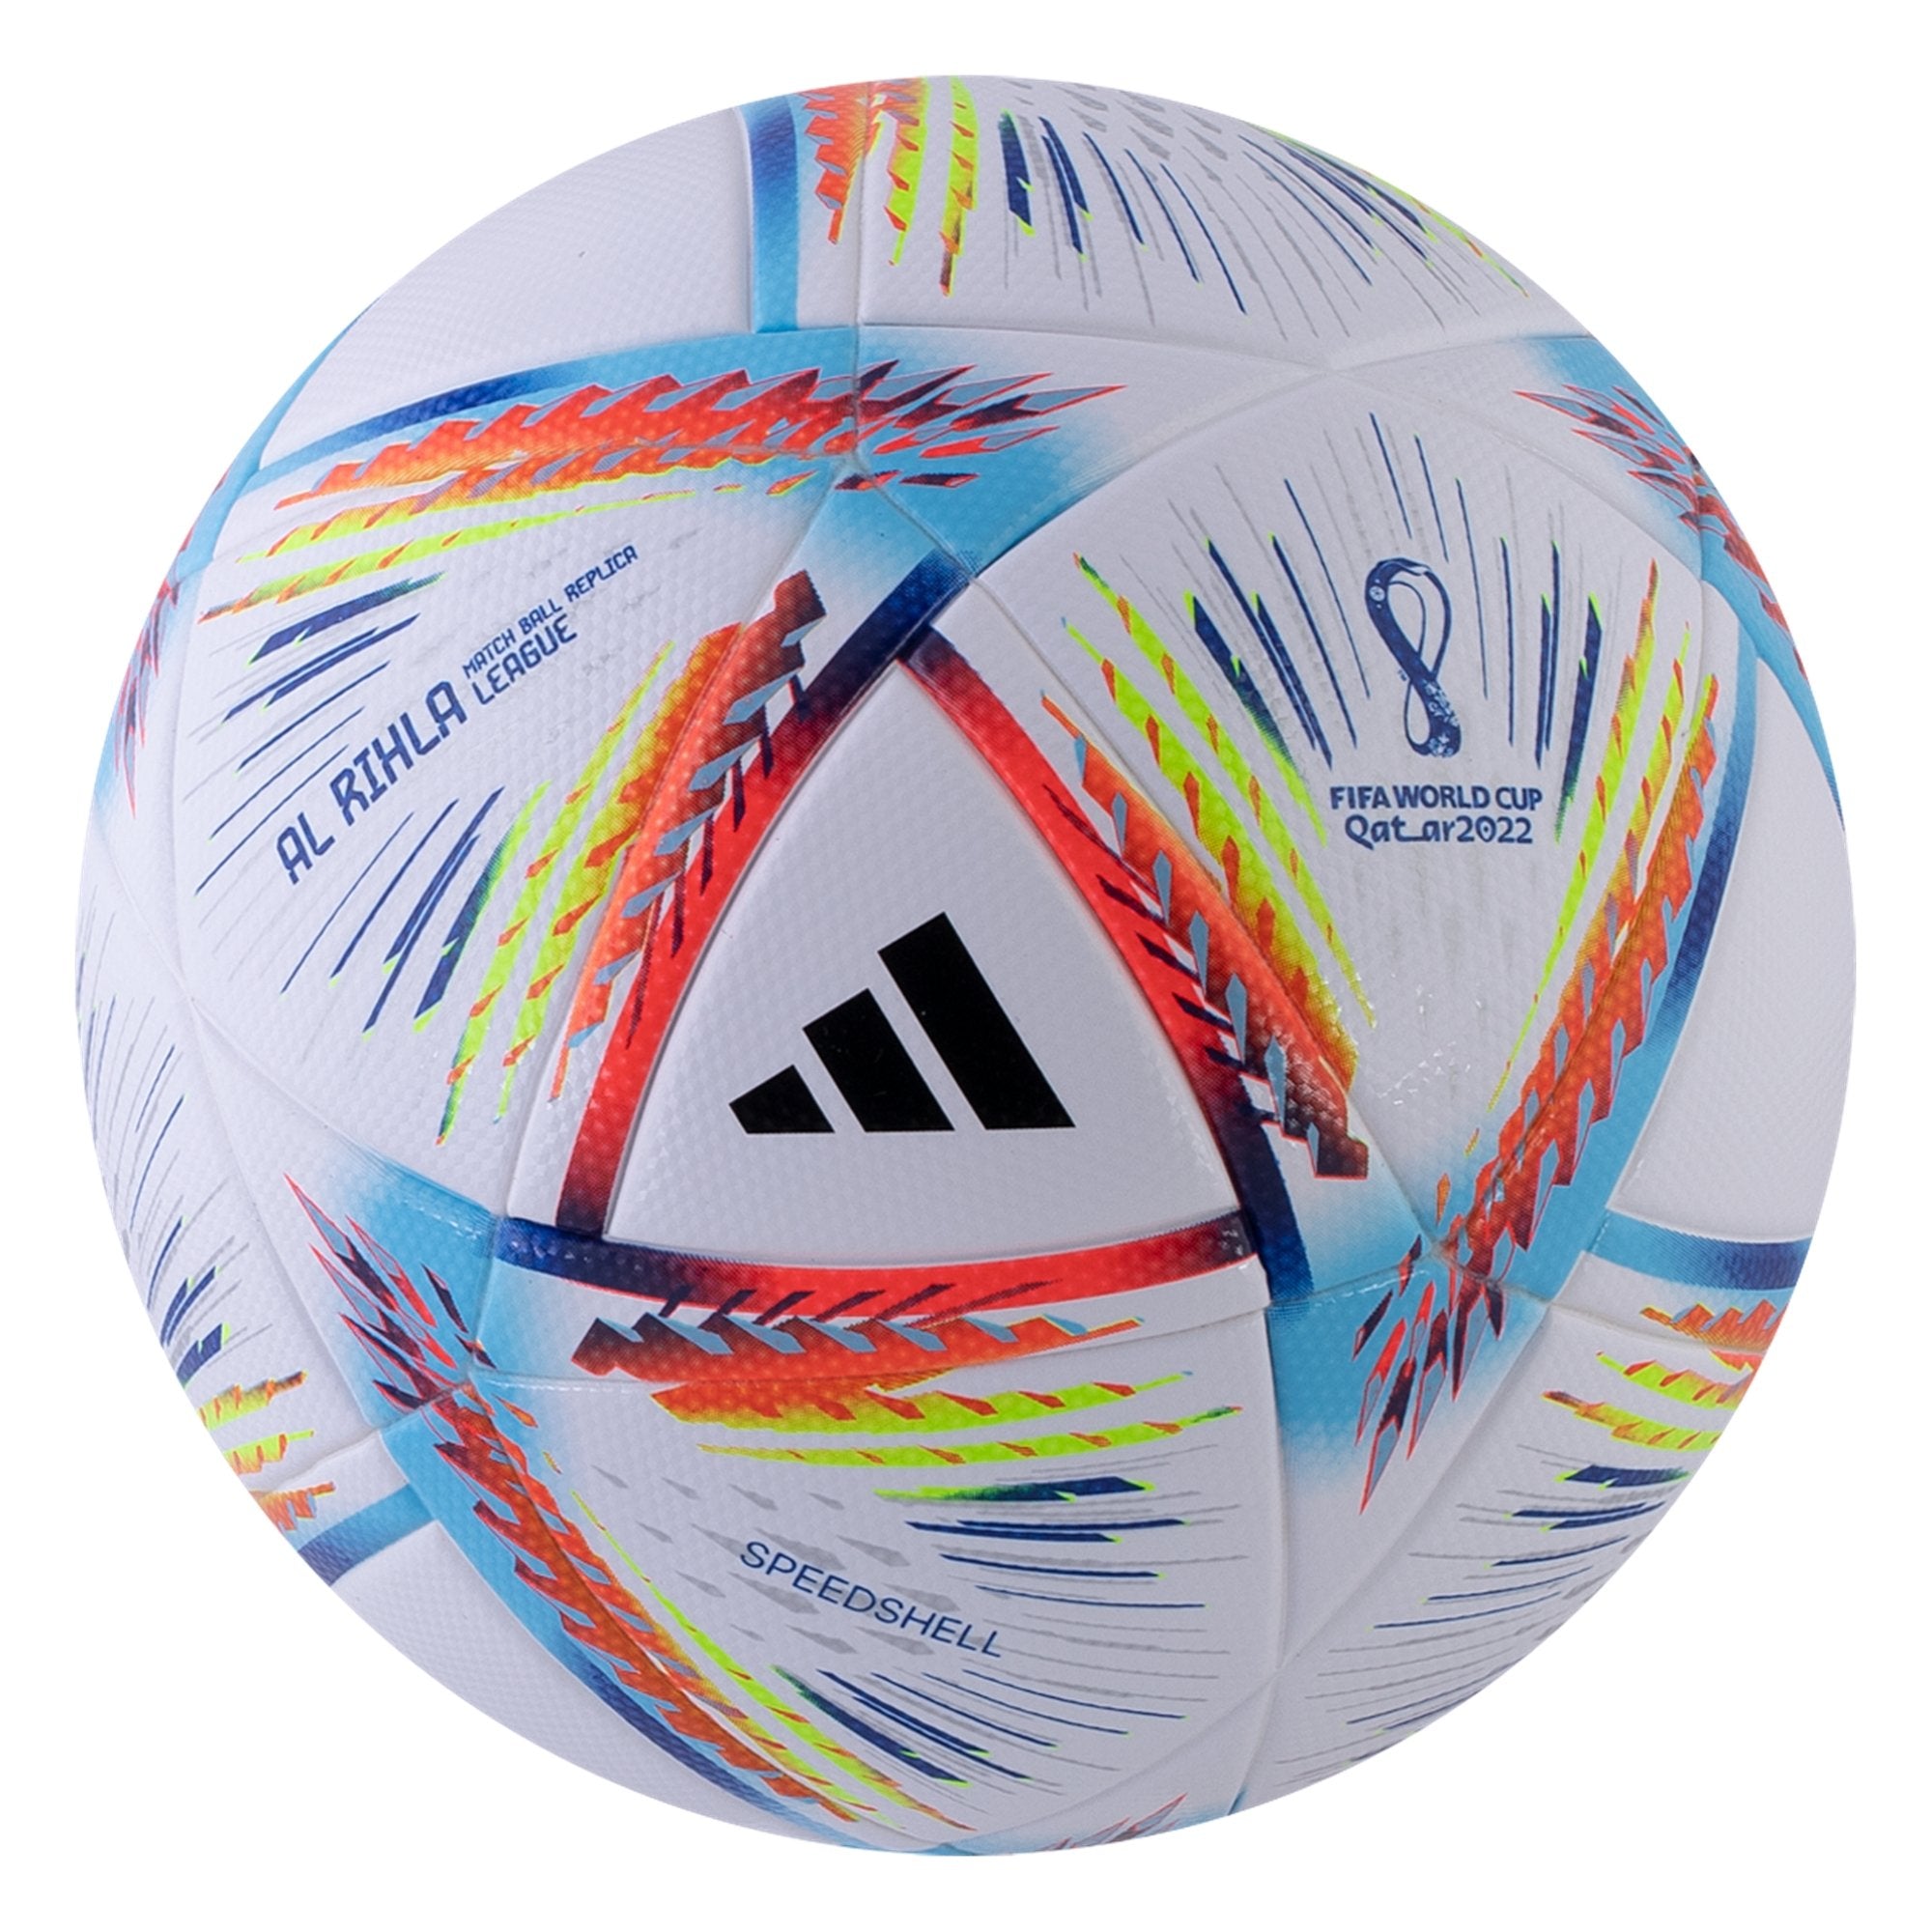 2022 fifa world cup soccer ball